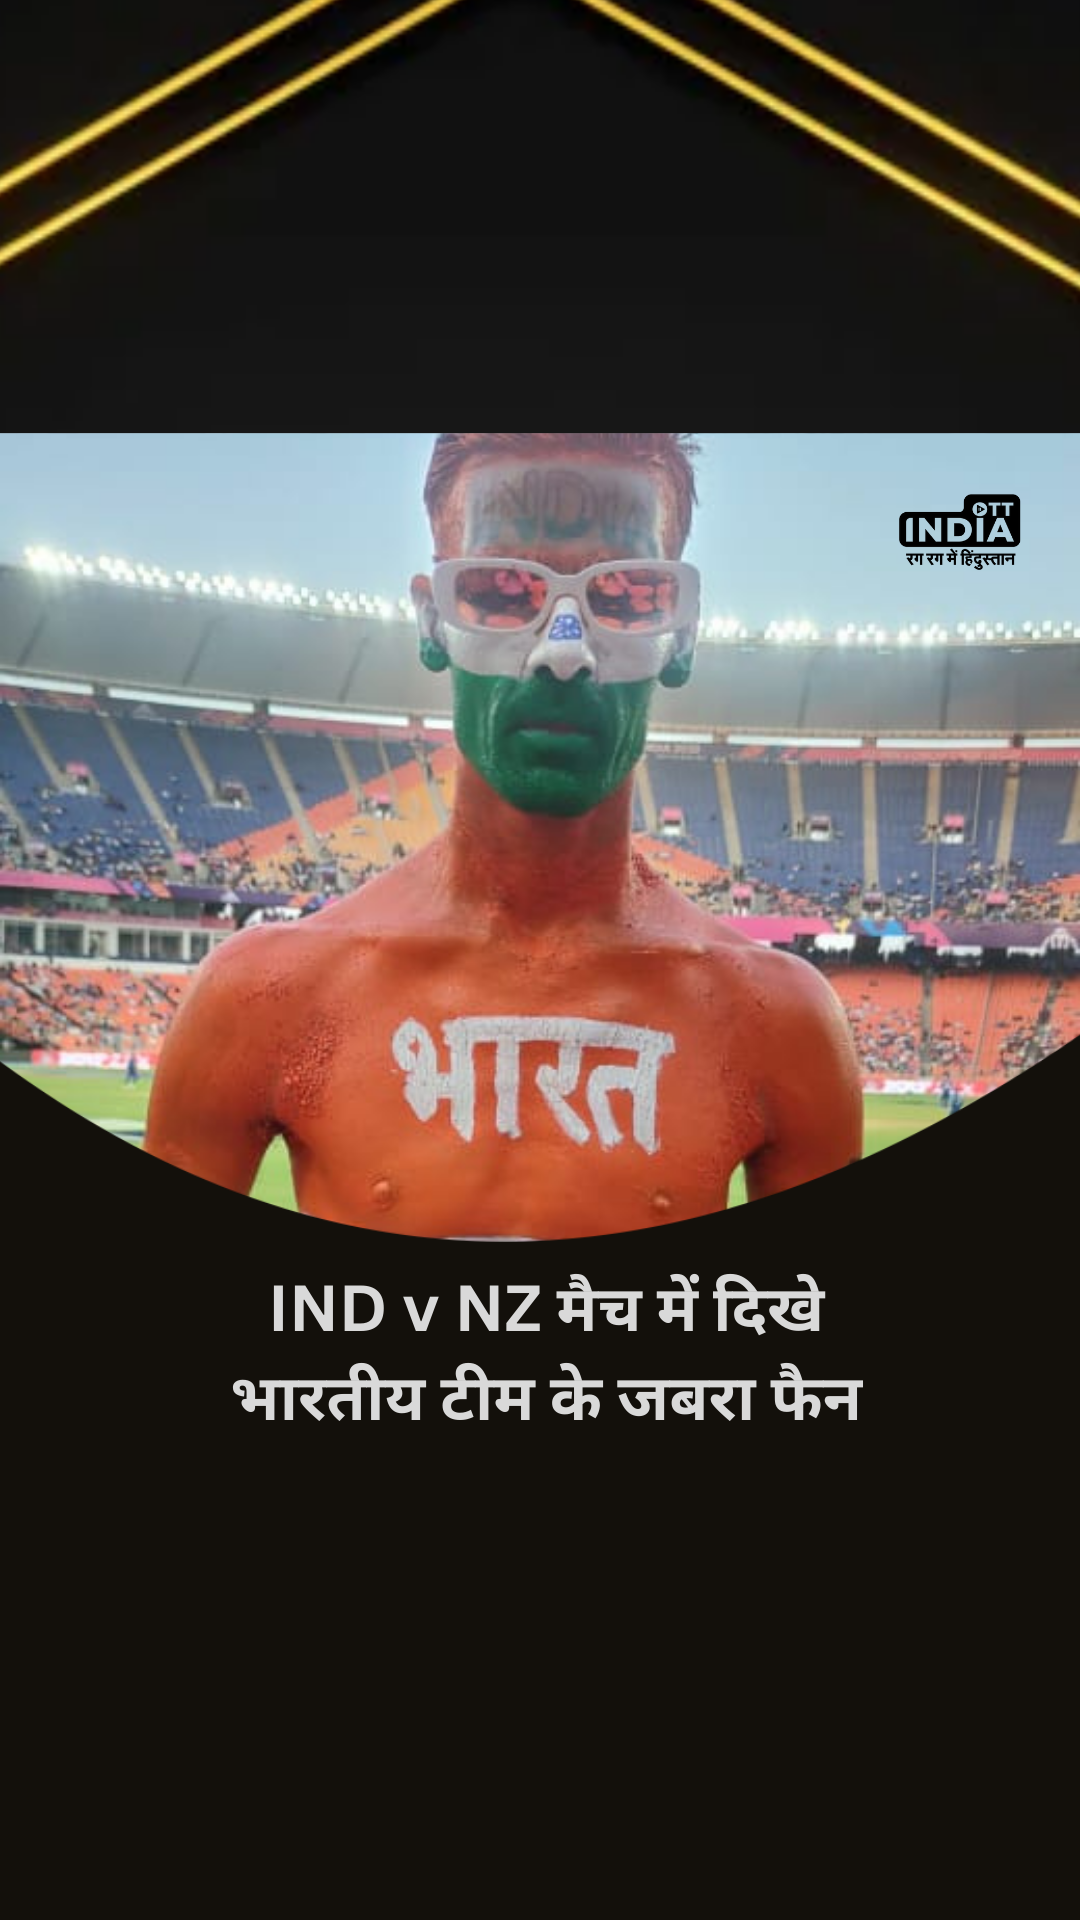 Huge fan Arun Haryani of indian team seen in Ind v NZ match